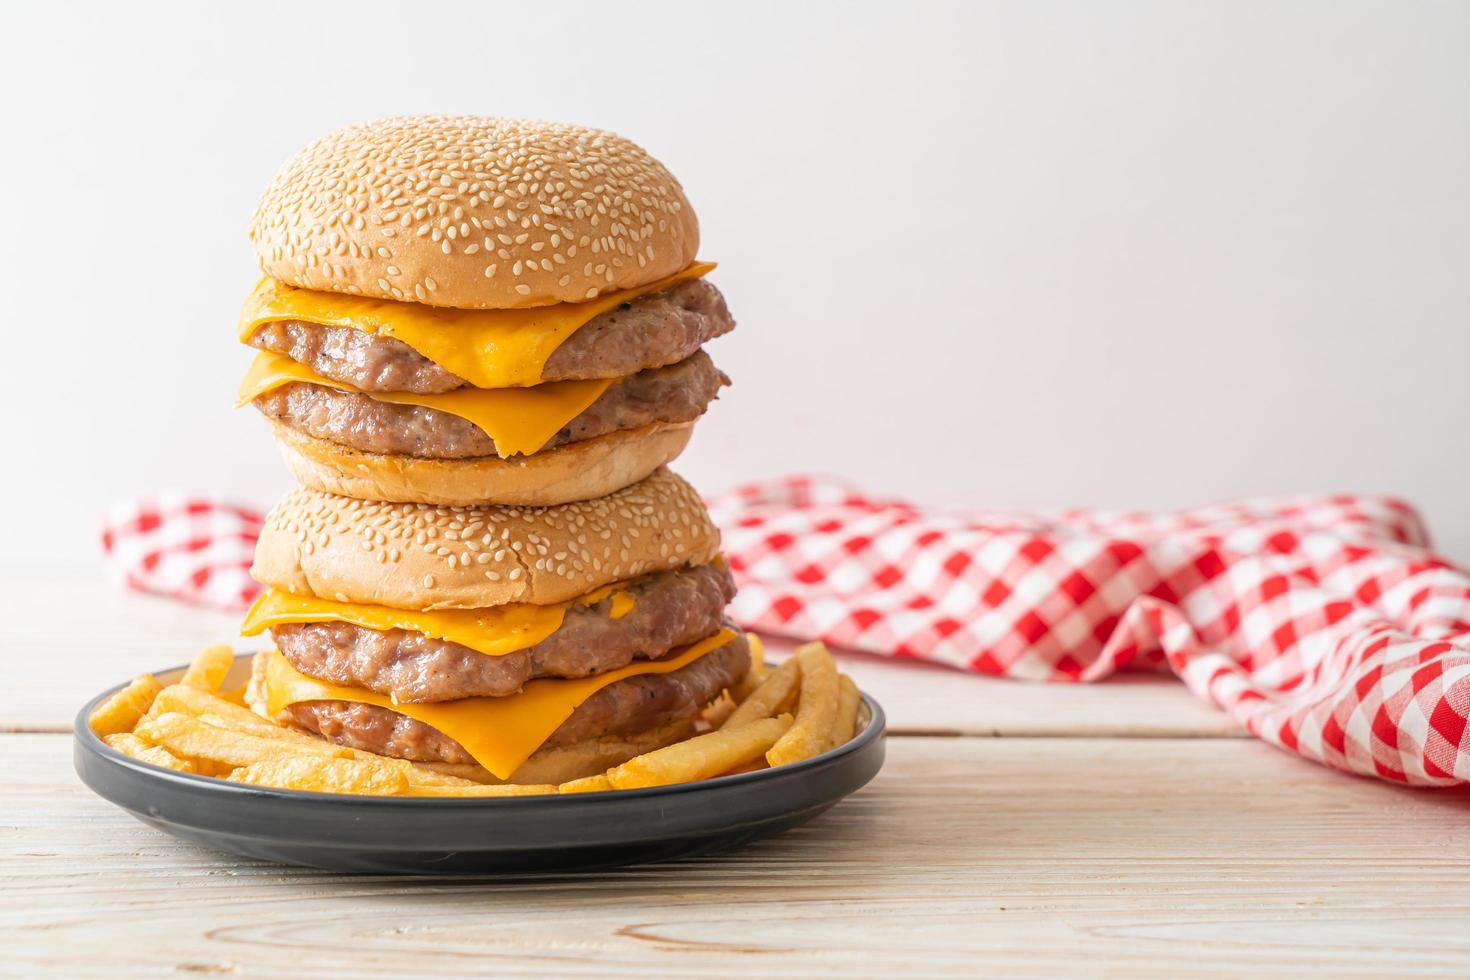 varkenshamburger of varkensburger met kaas en friet french foto